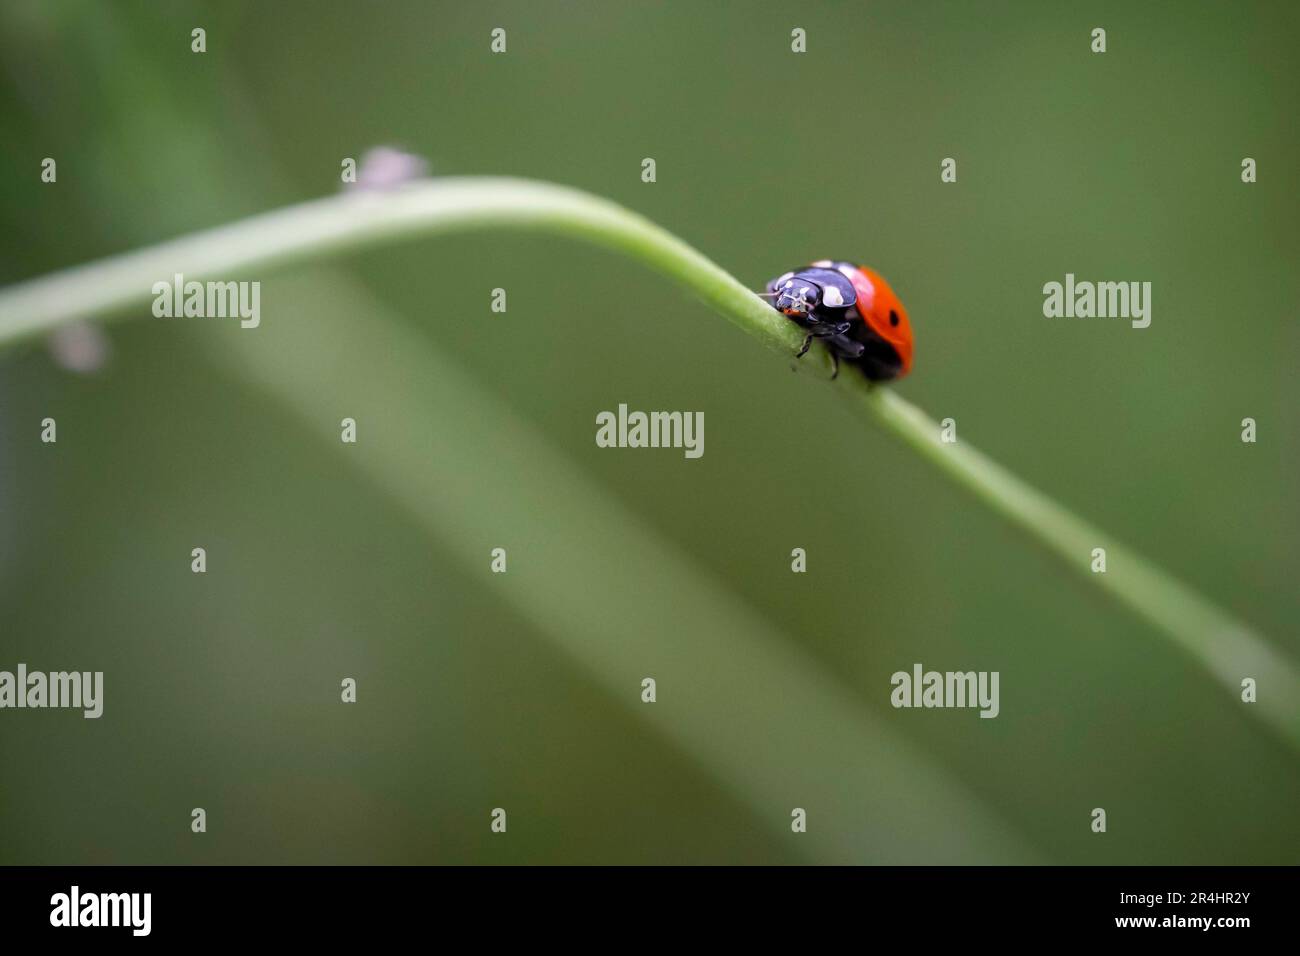 Ladybug or lady beetle walking on a branch Stock Photo